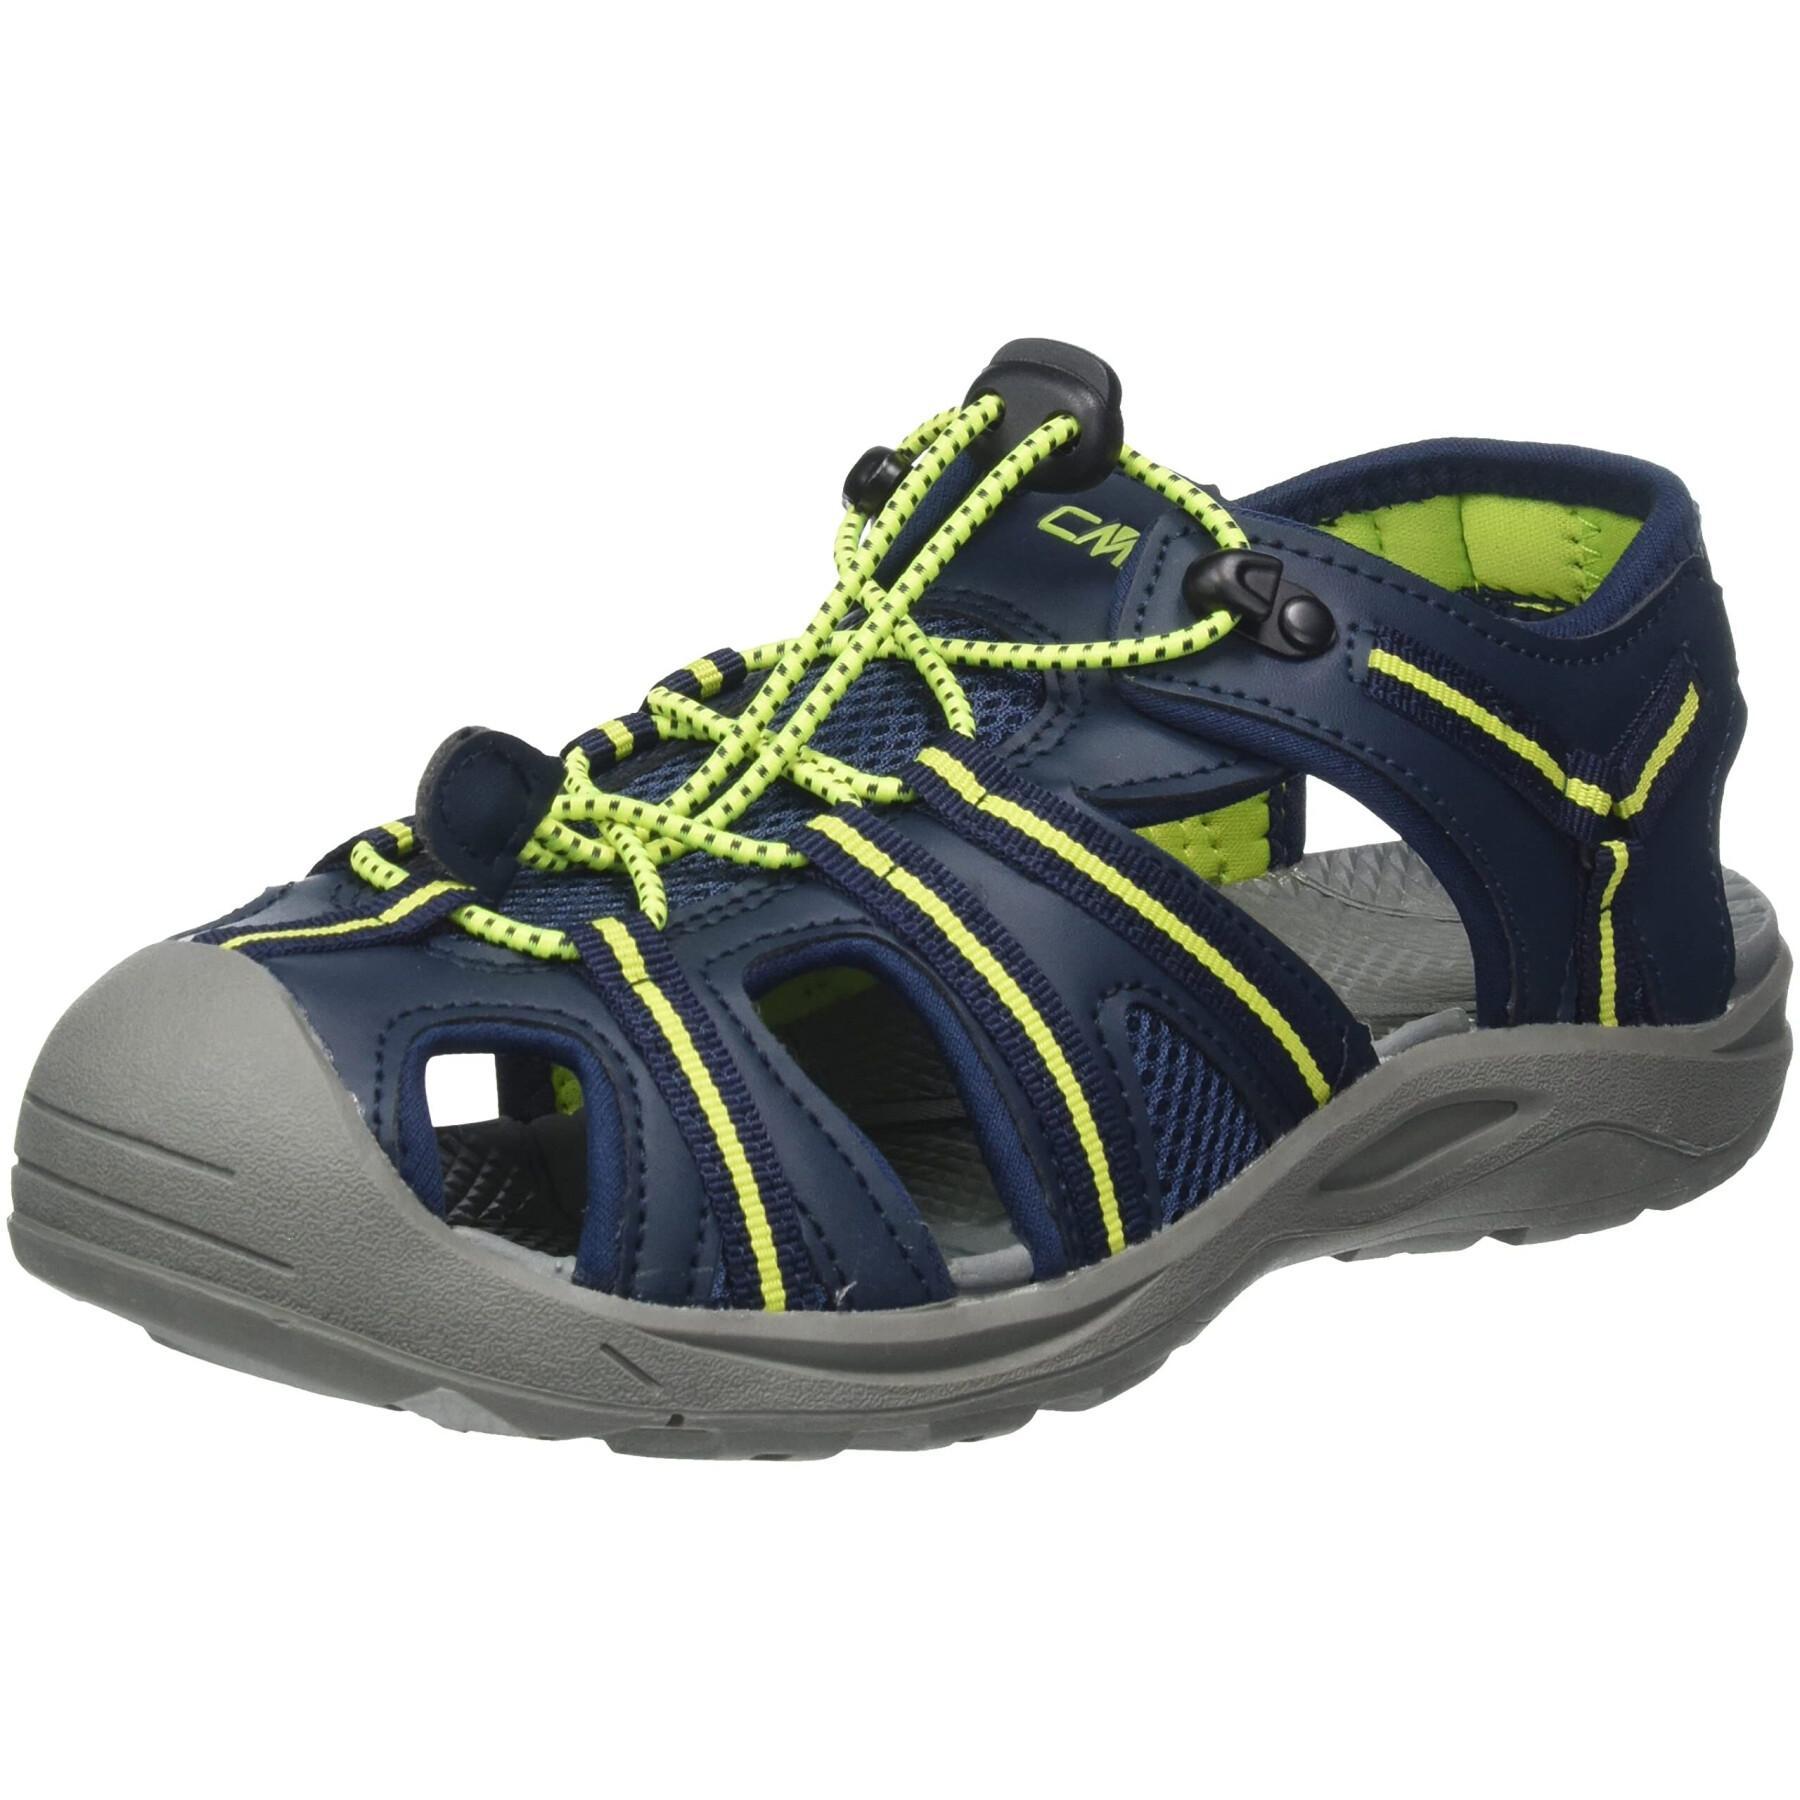 Sandals Hiking Children\'s - Shoes sandals 2.0 Hiking Hiking - CMP - Aquari